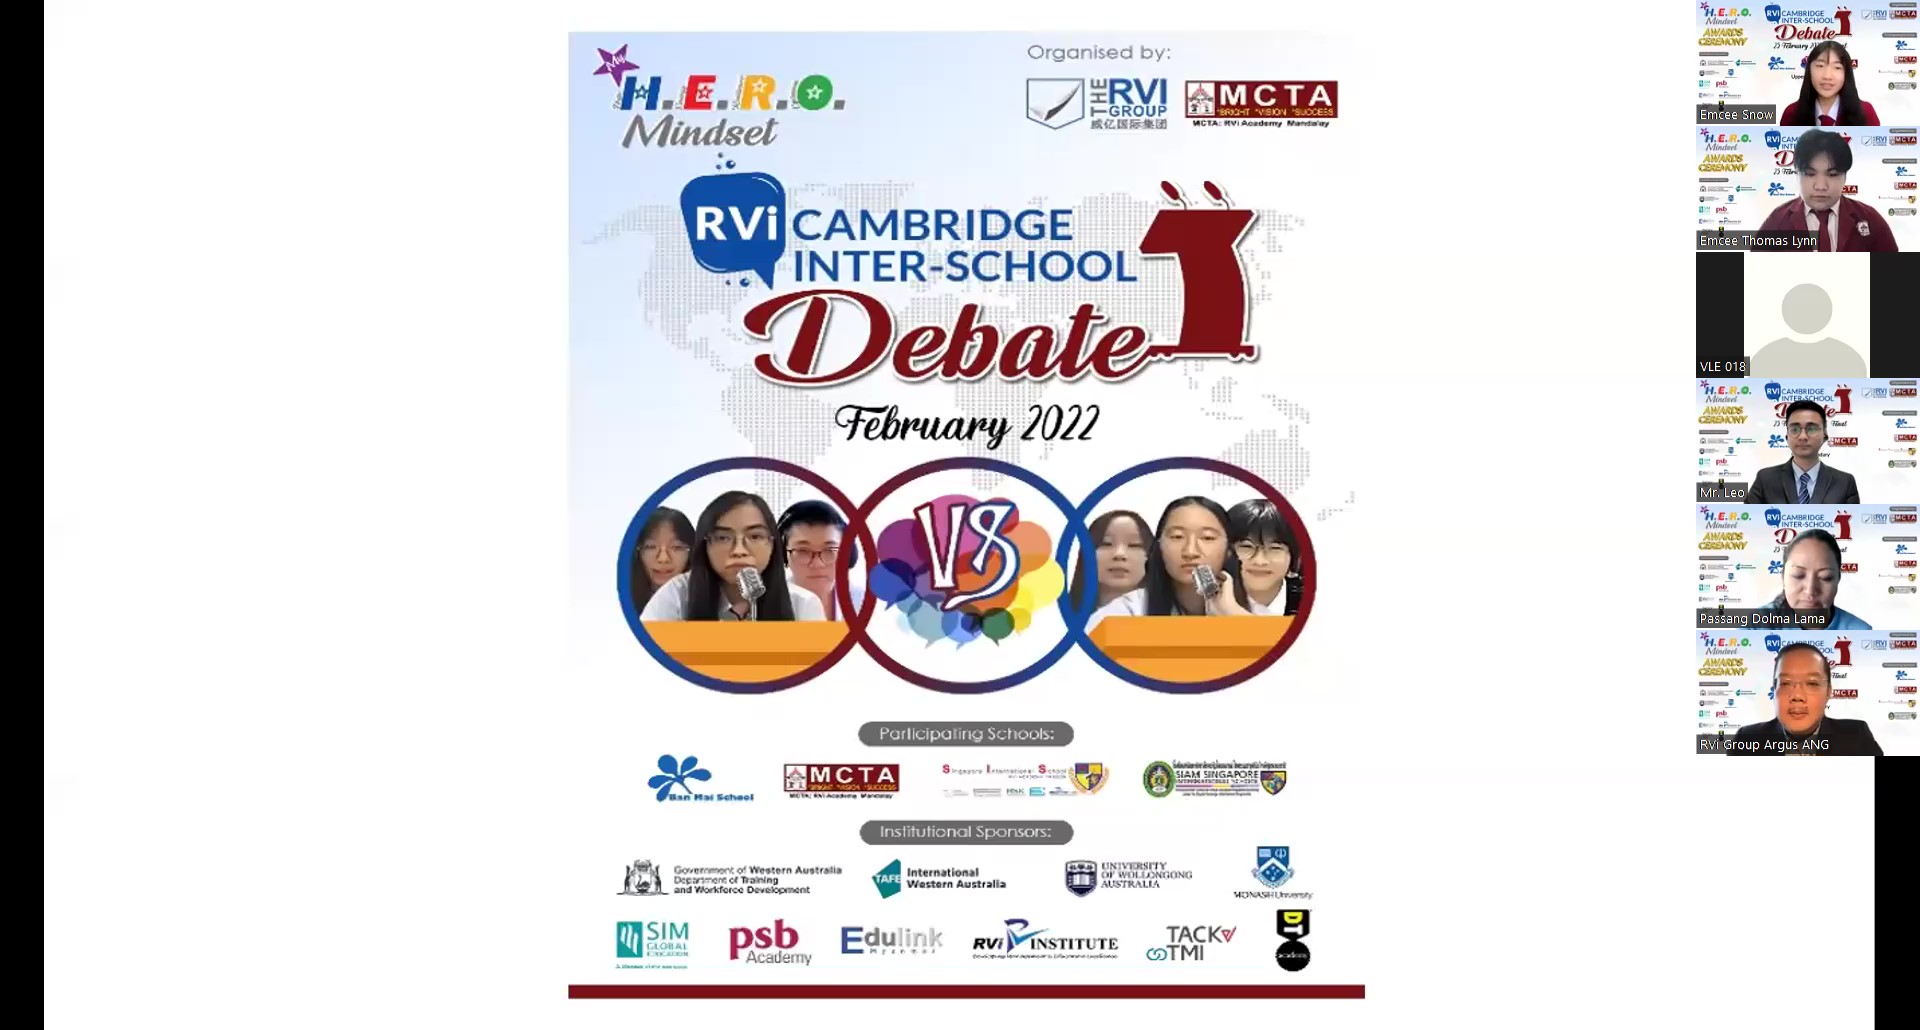 RVi Cambridge Inter-school debate